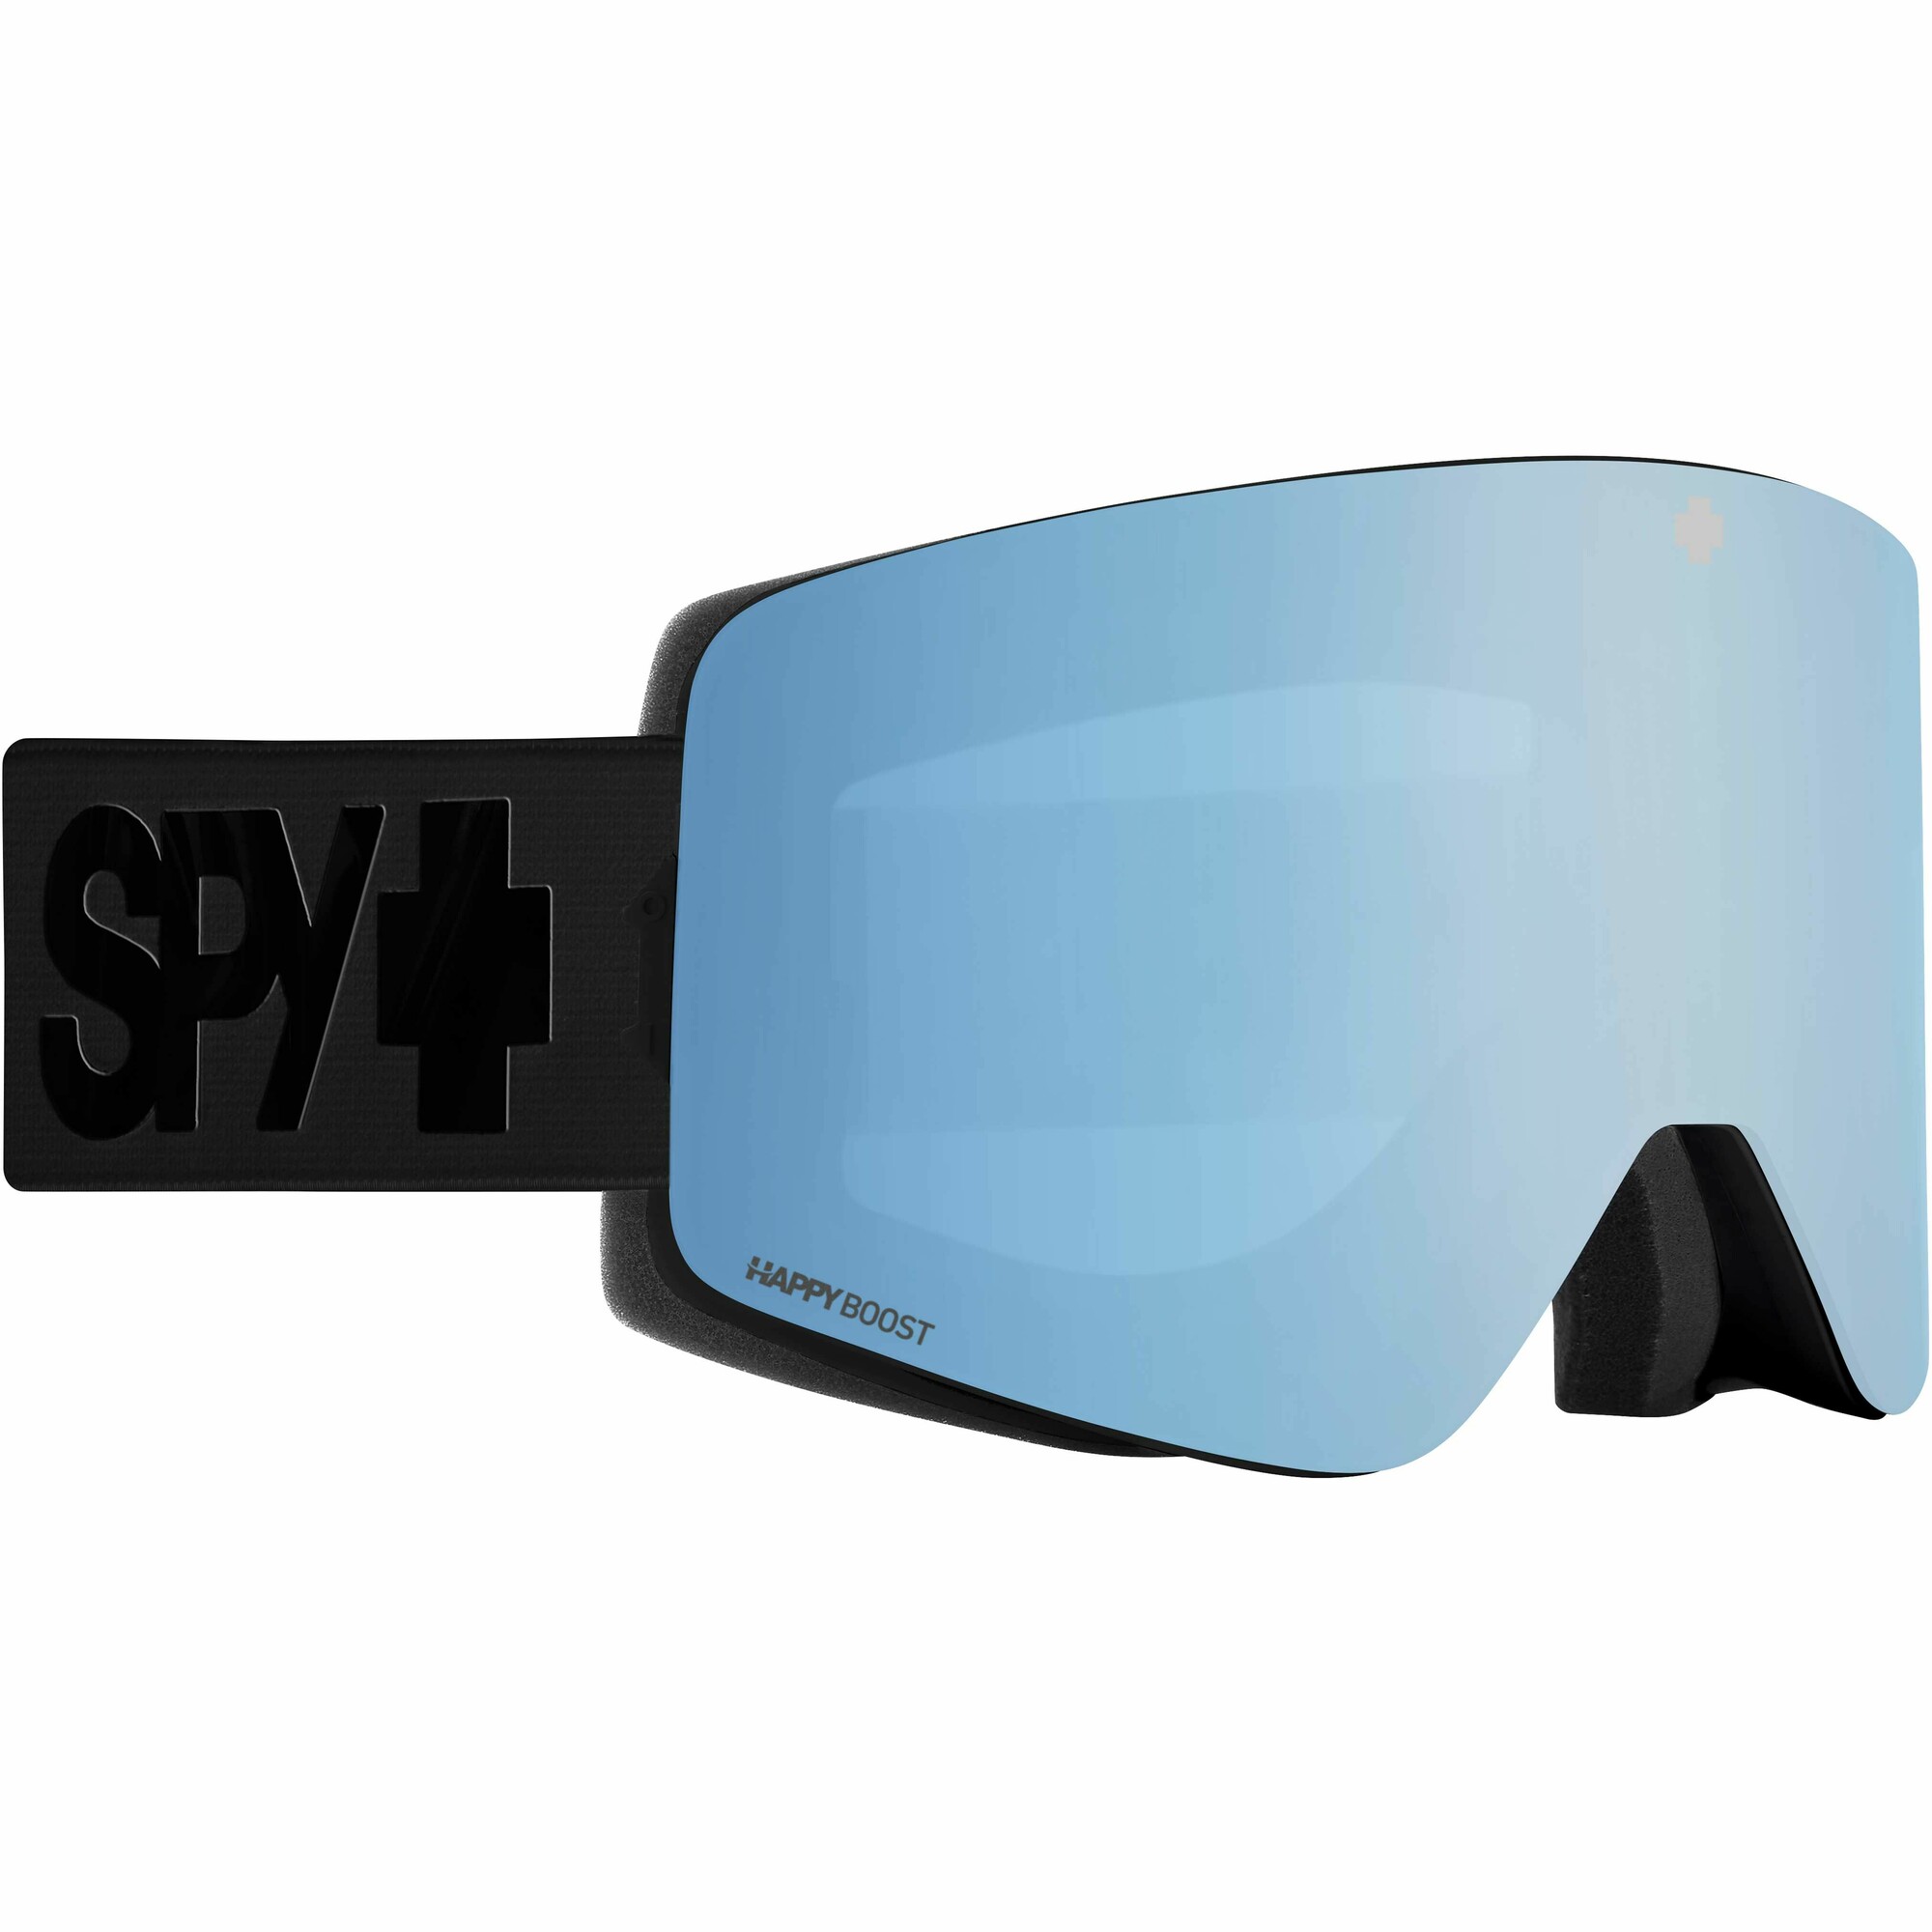 Spy Marauder goggle matte black / happy boost blue spectra mirror (met extra lens)